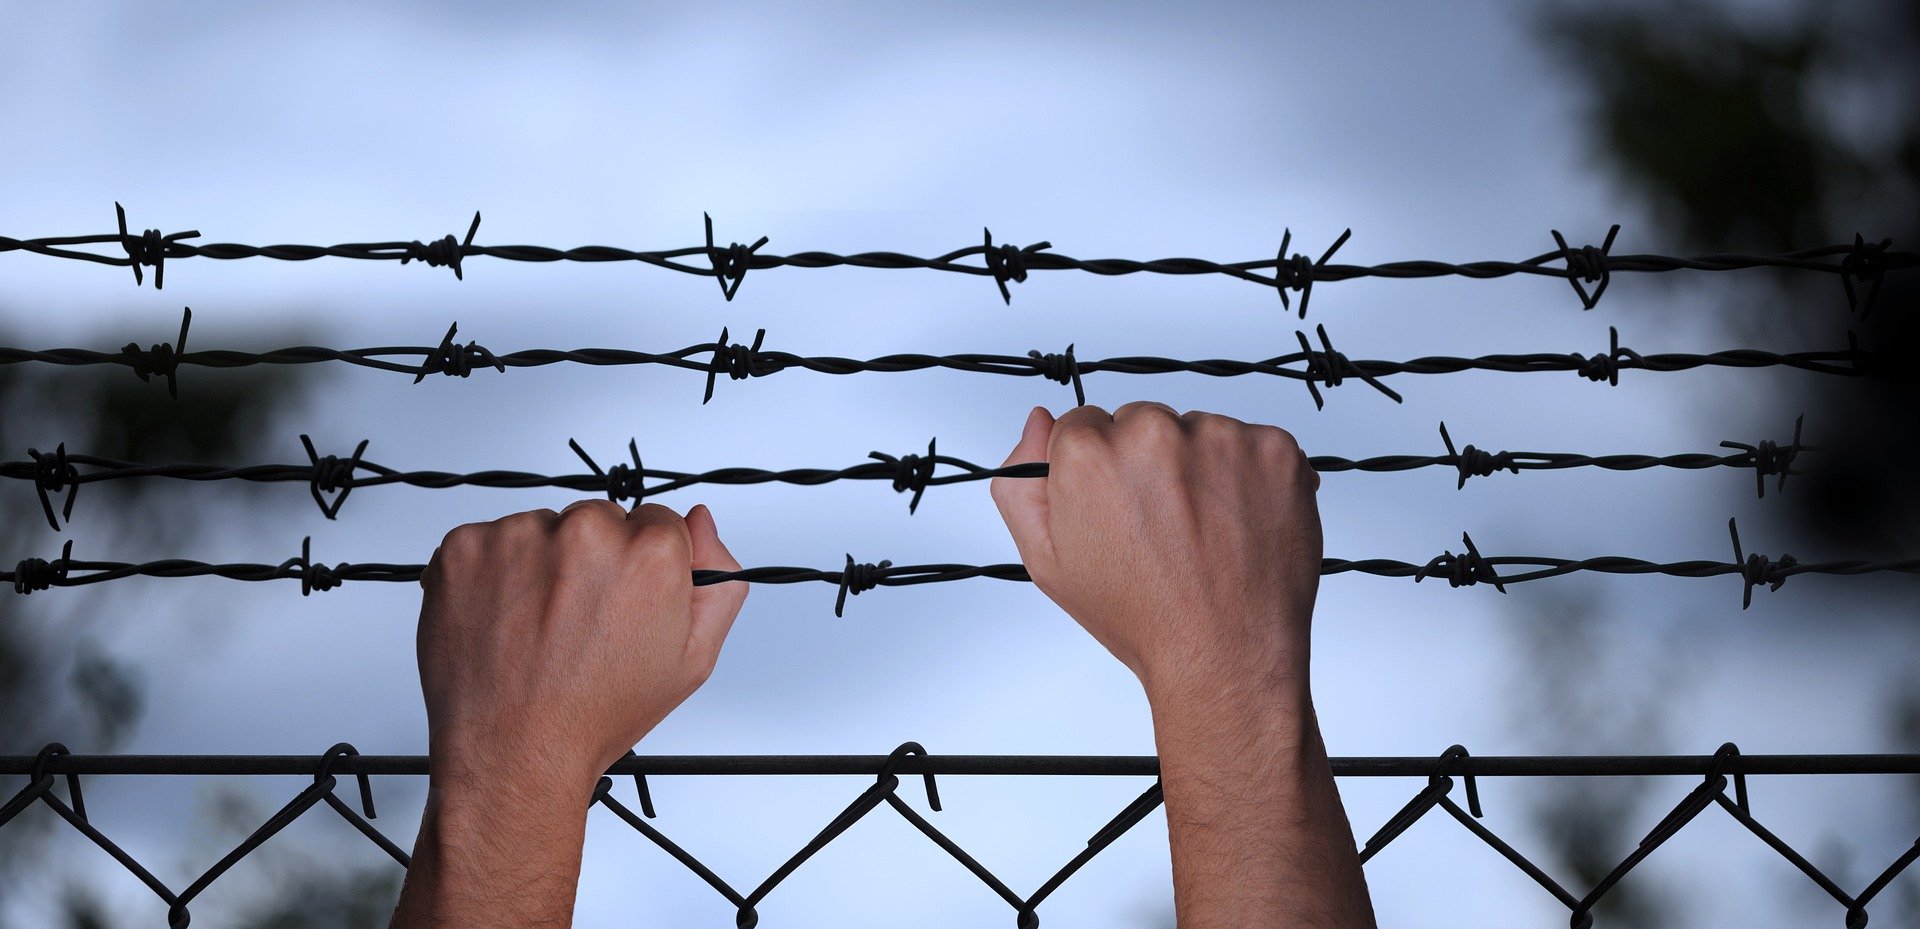 Hands grabbing a barbed-wire fence. | Photo: Pixabay/Gerd Altmann